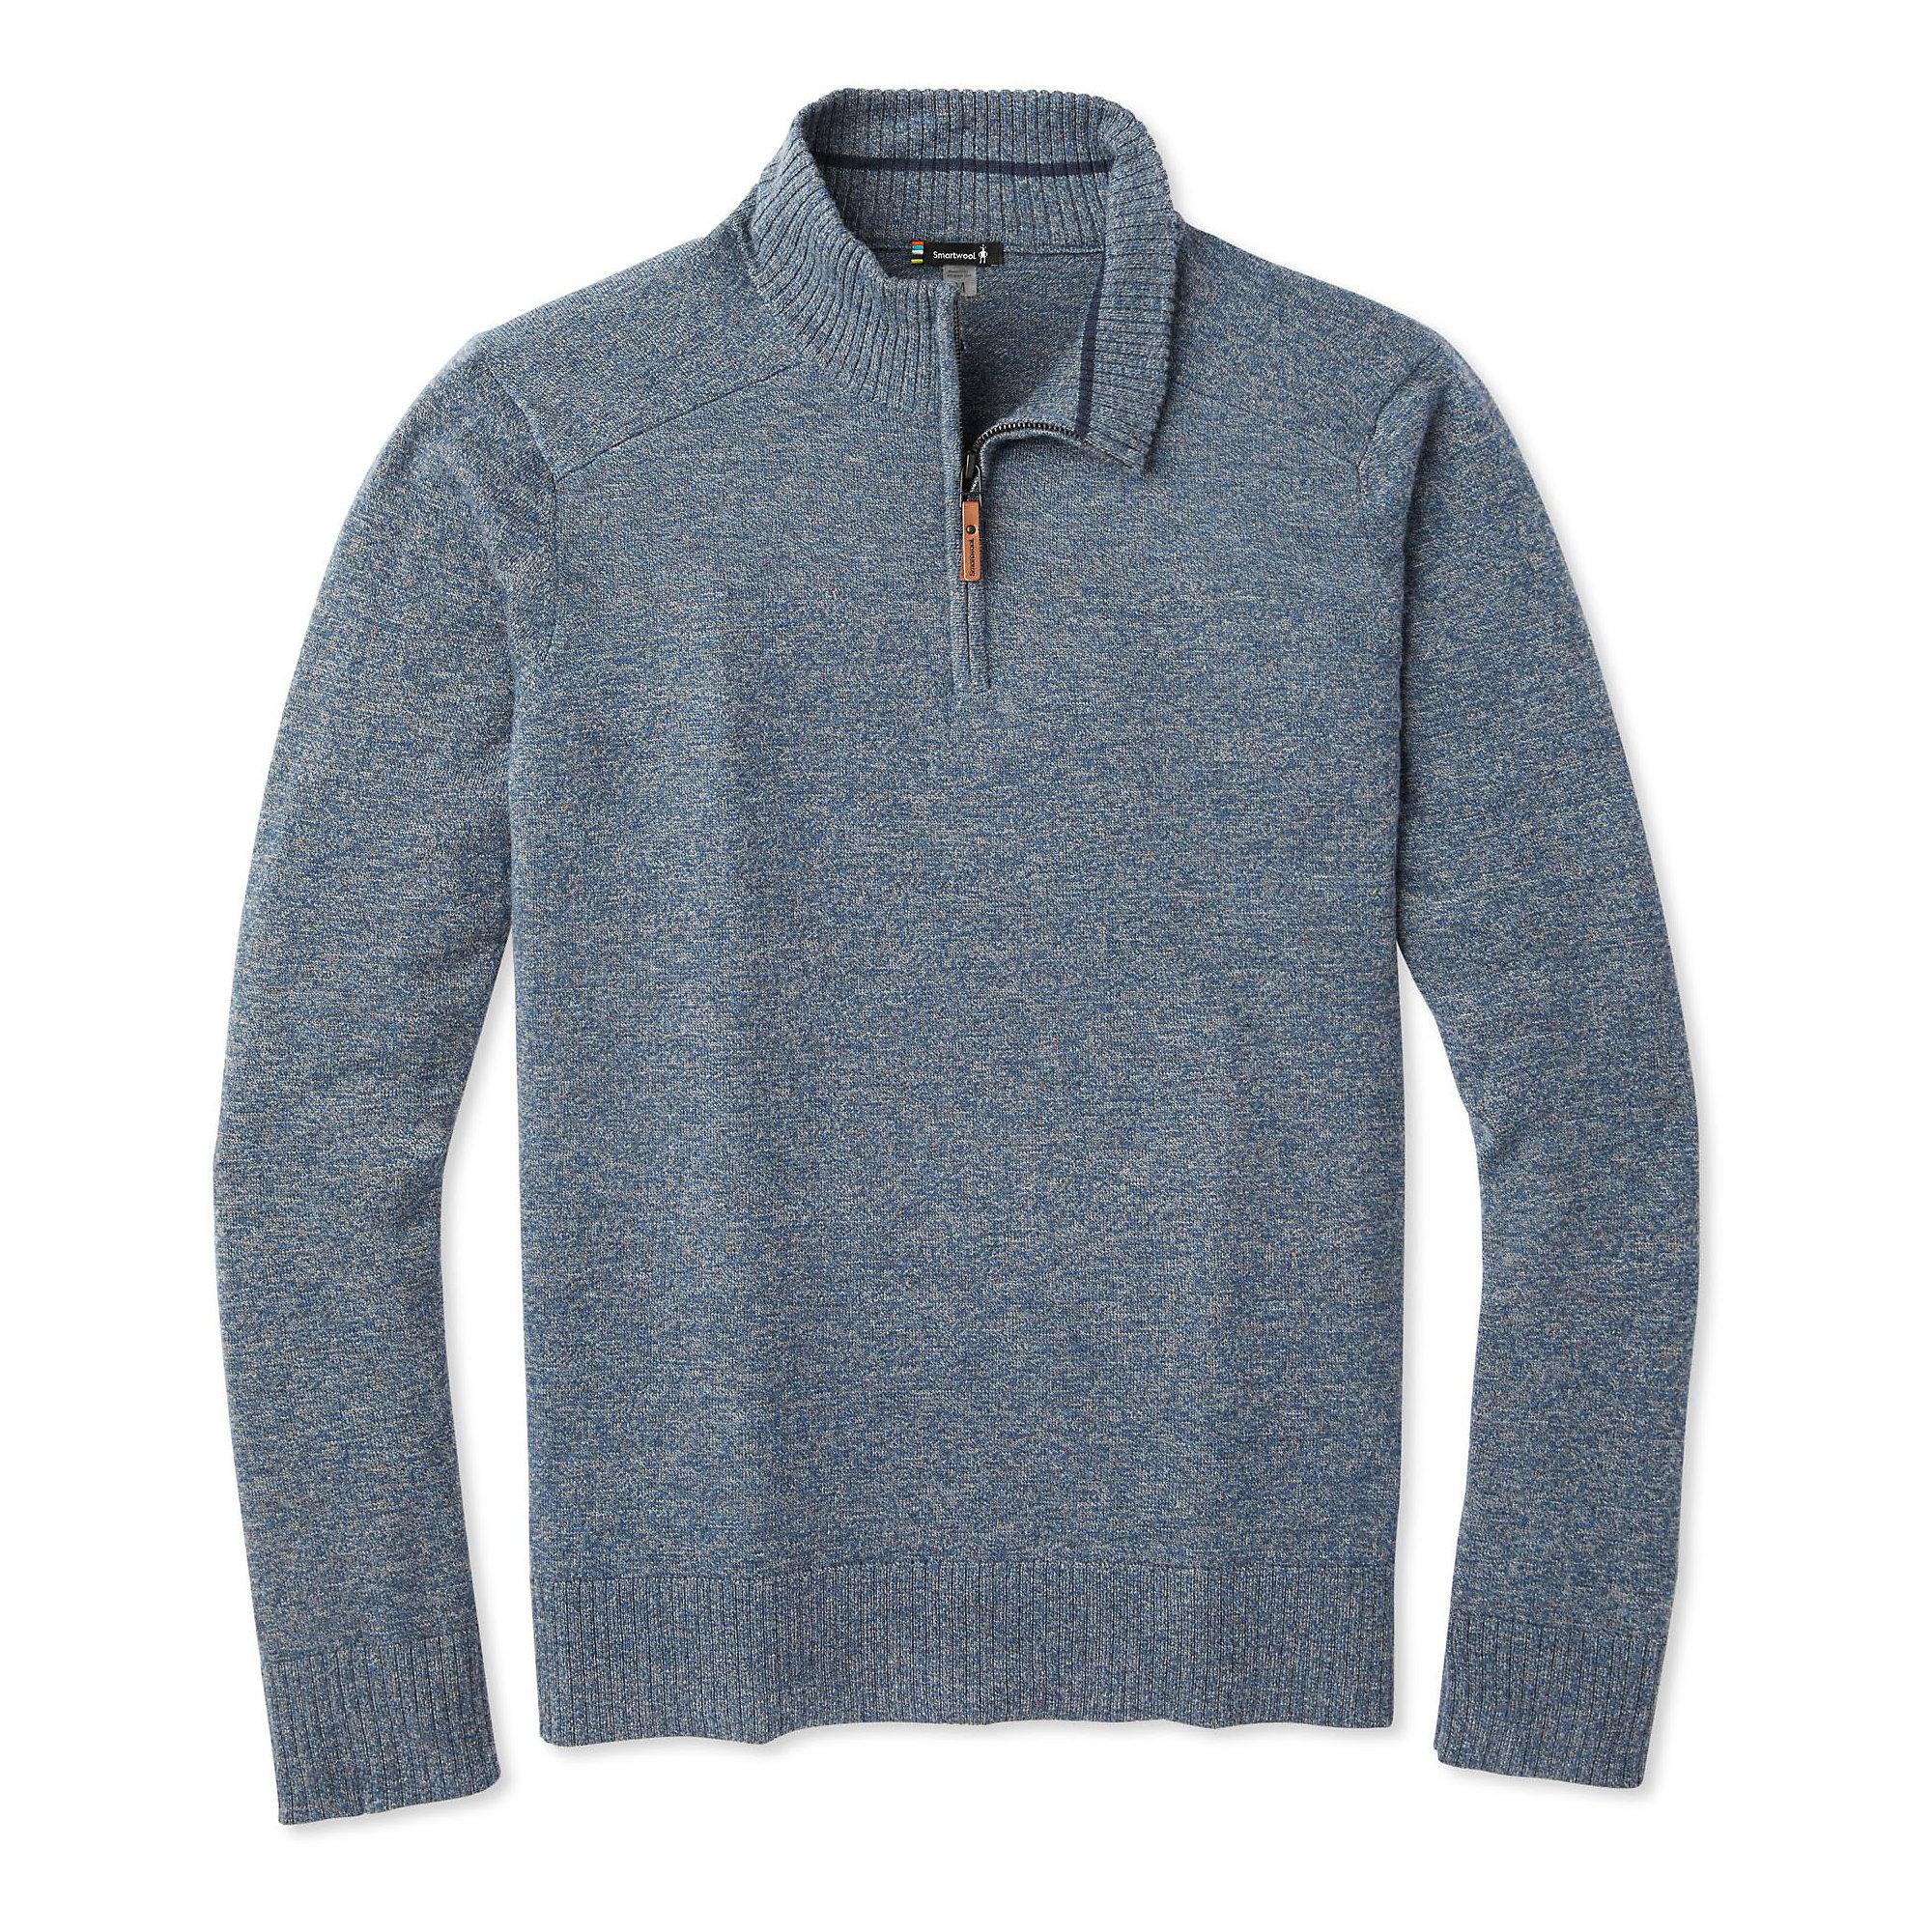 Smartwool Sparwood Half Zip Sweater in Blue for Men - Lyst